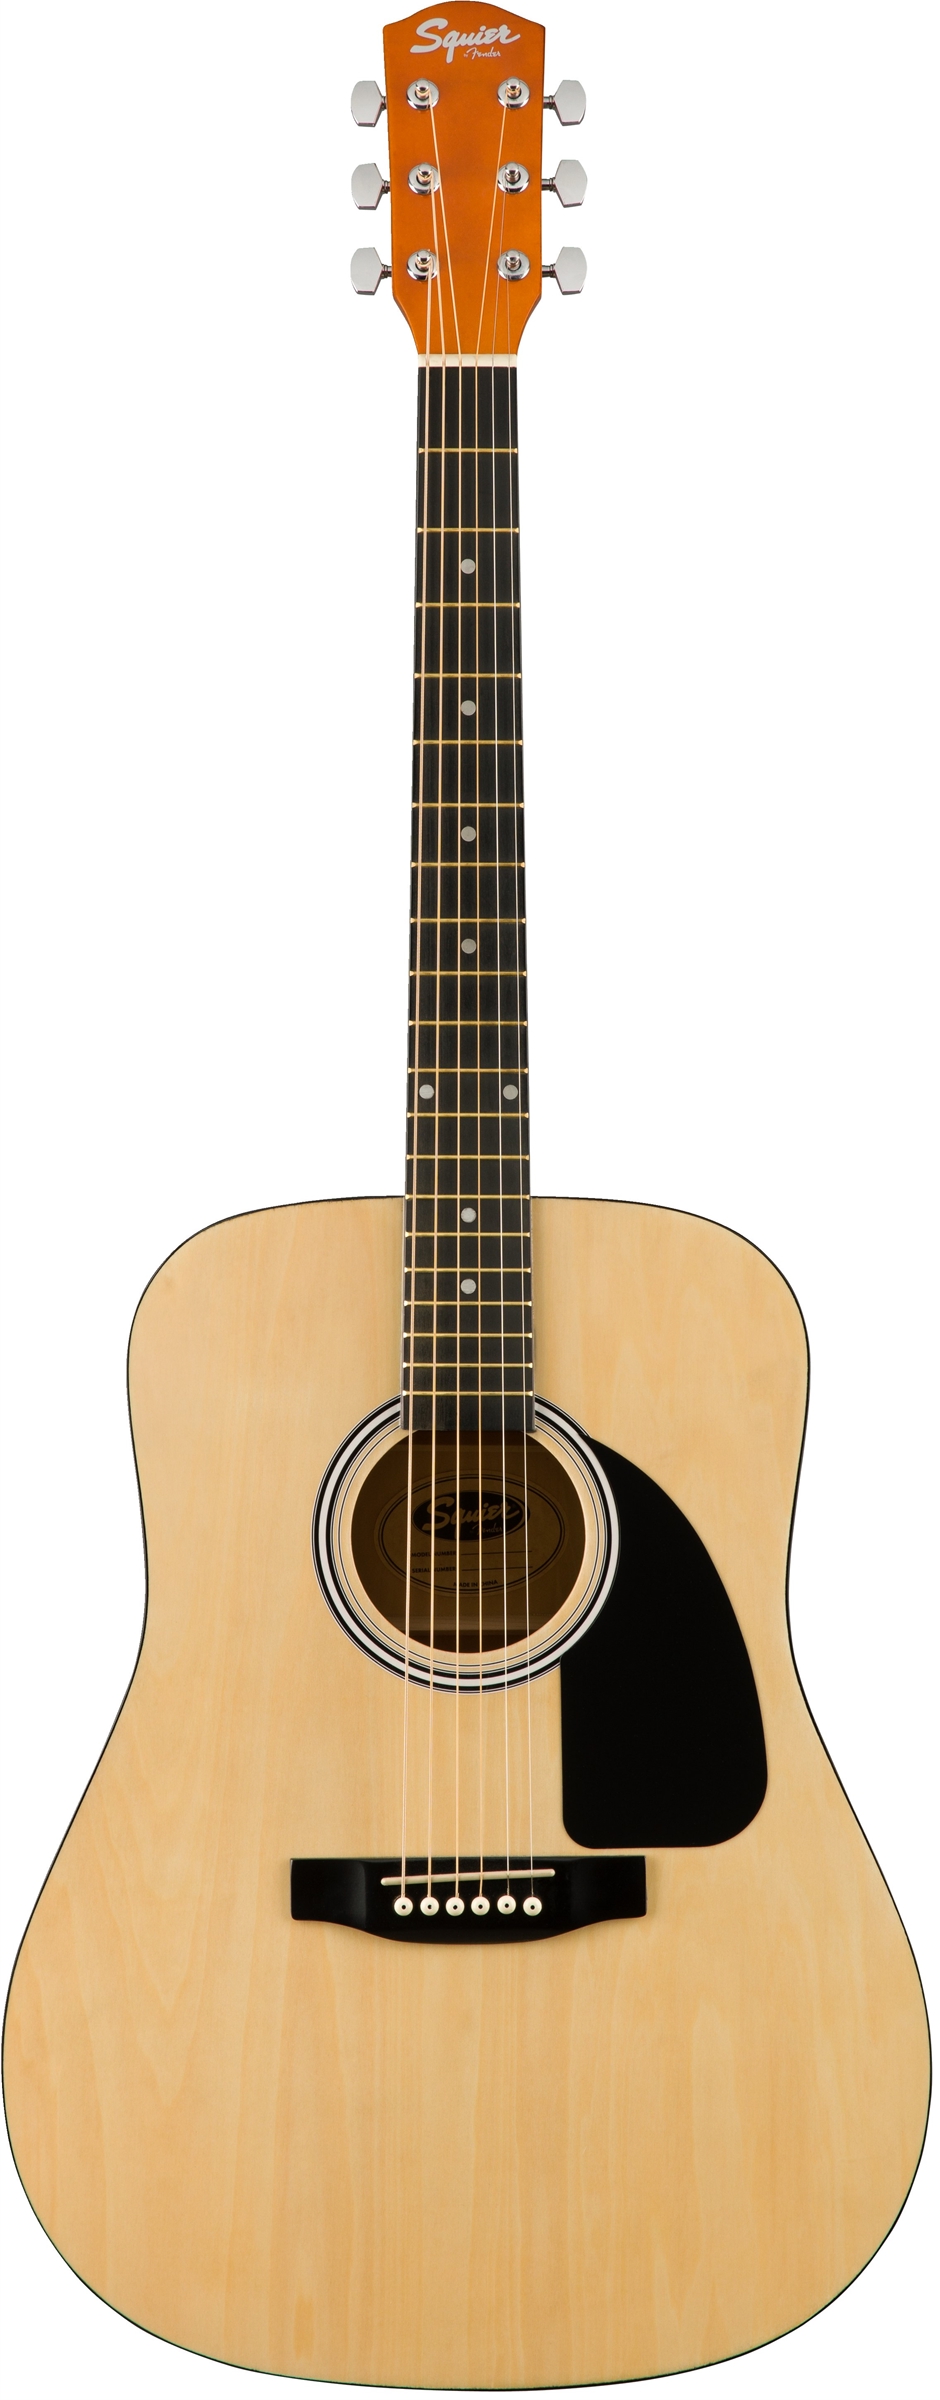 FENDER SQUIER SA-150 DREADNOUGHT, NAT - акустическая гитара, дредноут, цвет натуральный